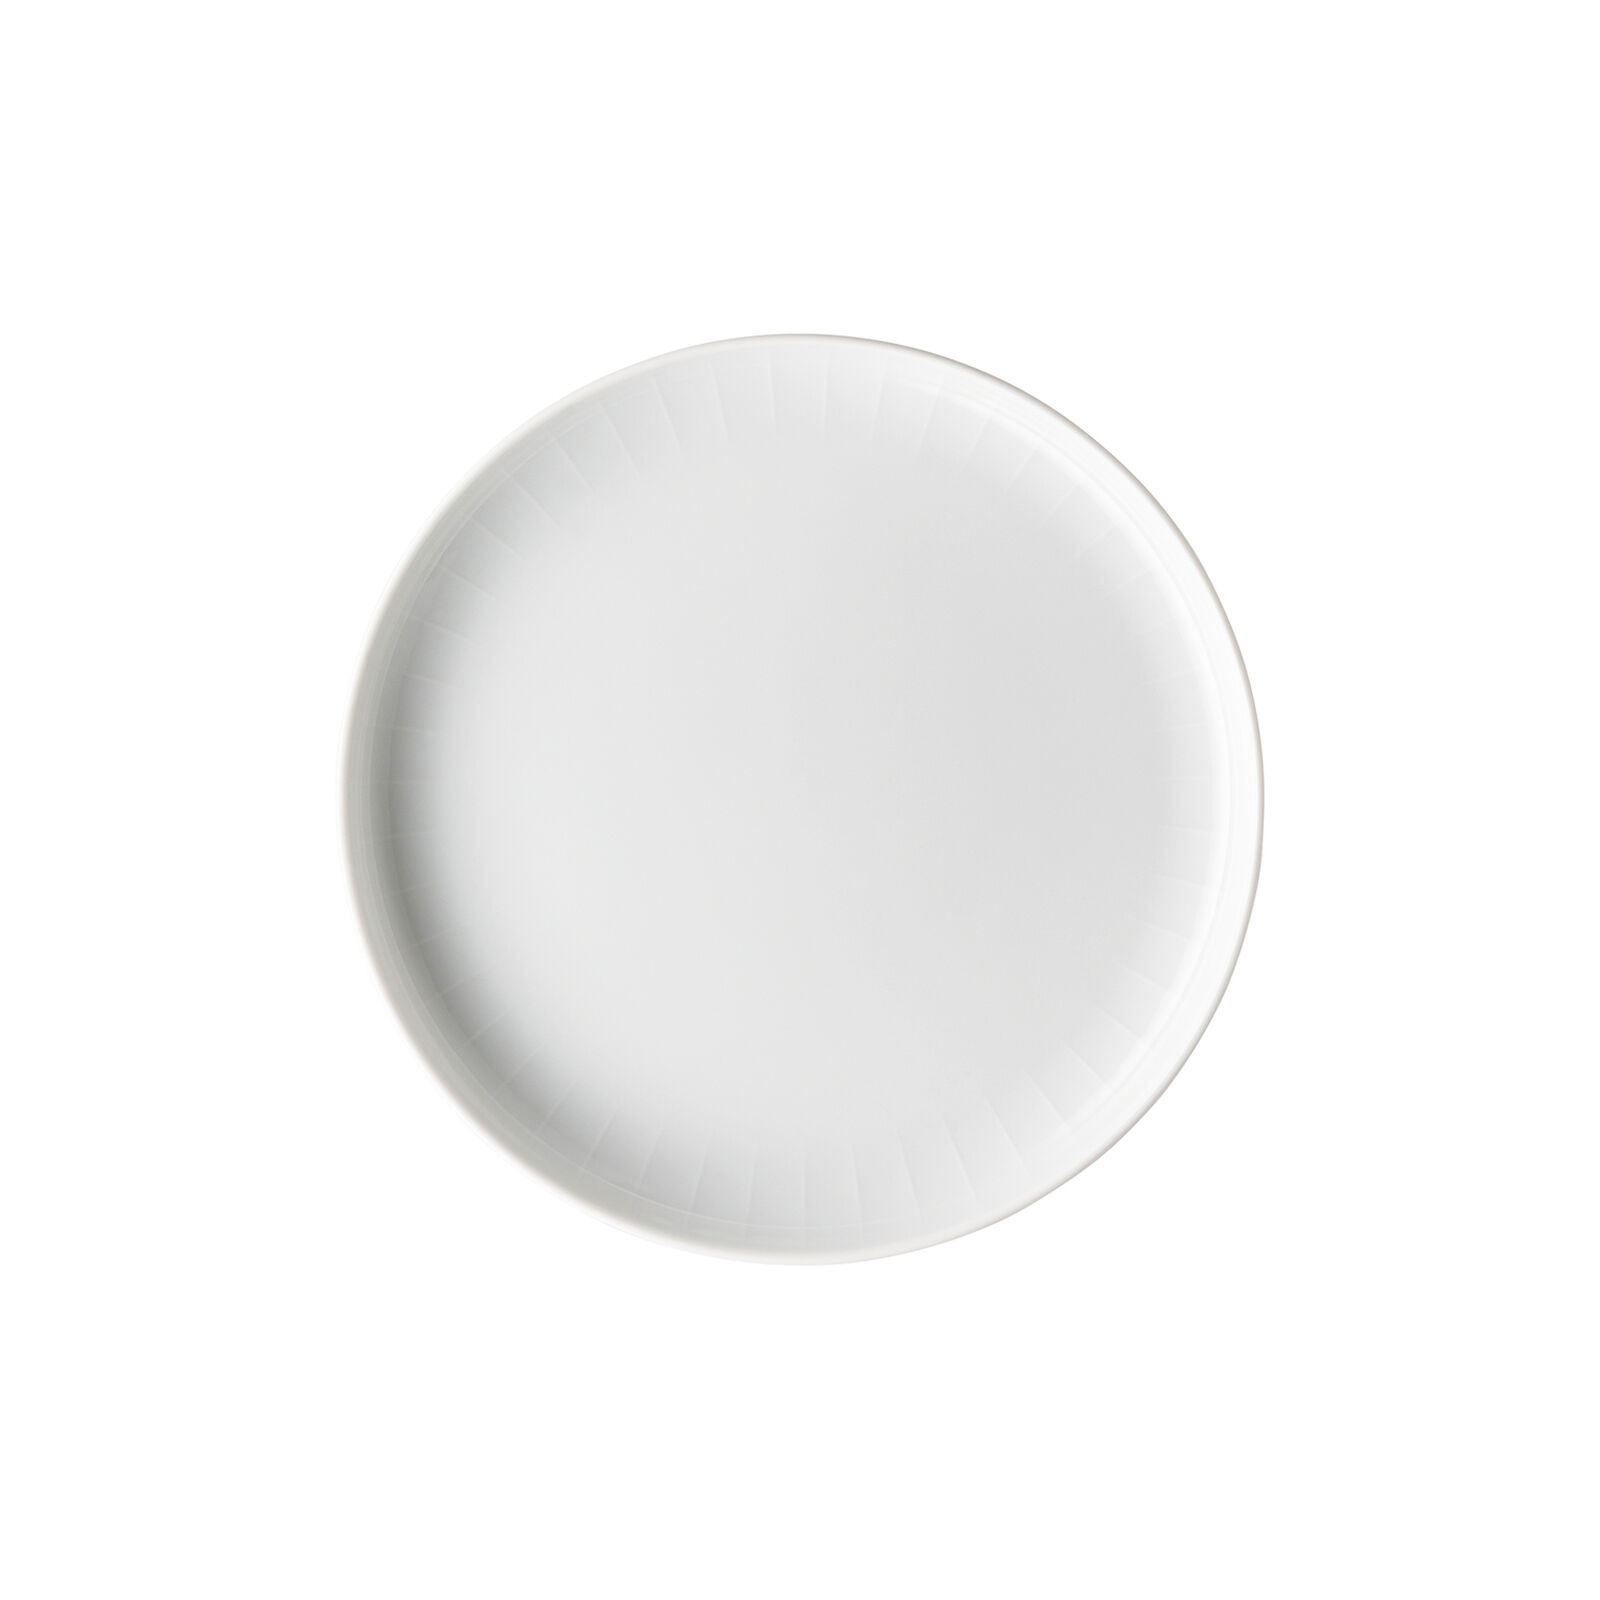 Konijn Correspondentie Ik heb het erkend Rosenthal Porcelain, Gourmet plate, 8 1/2 inch, Joyn White